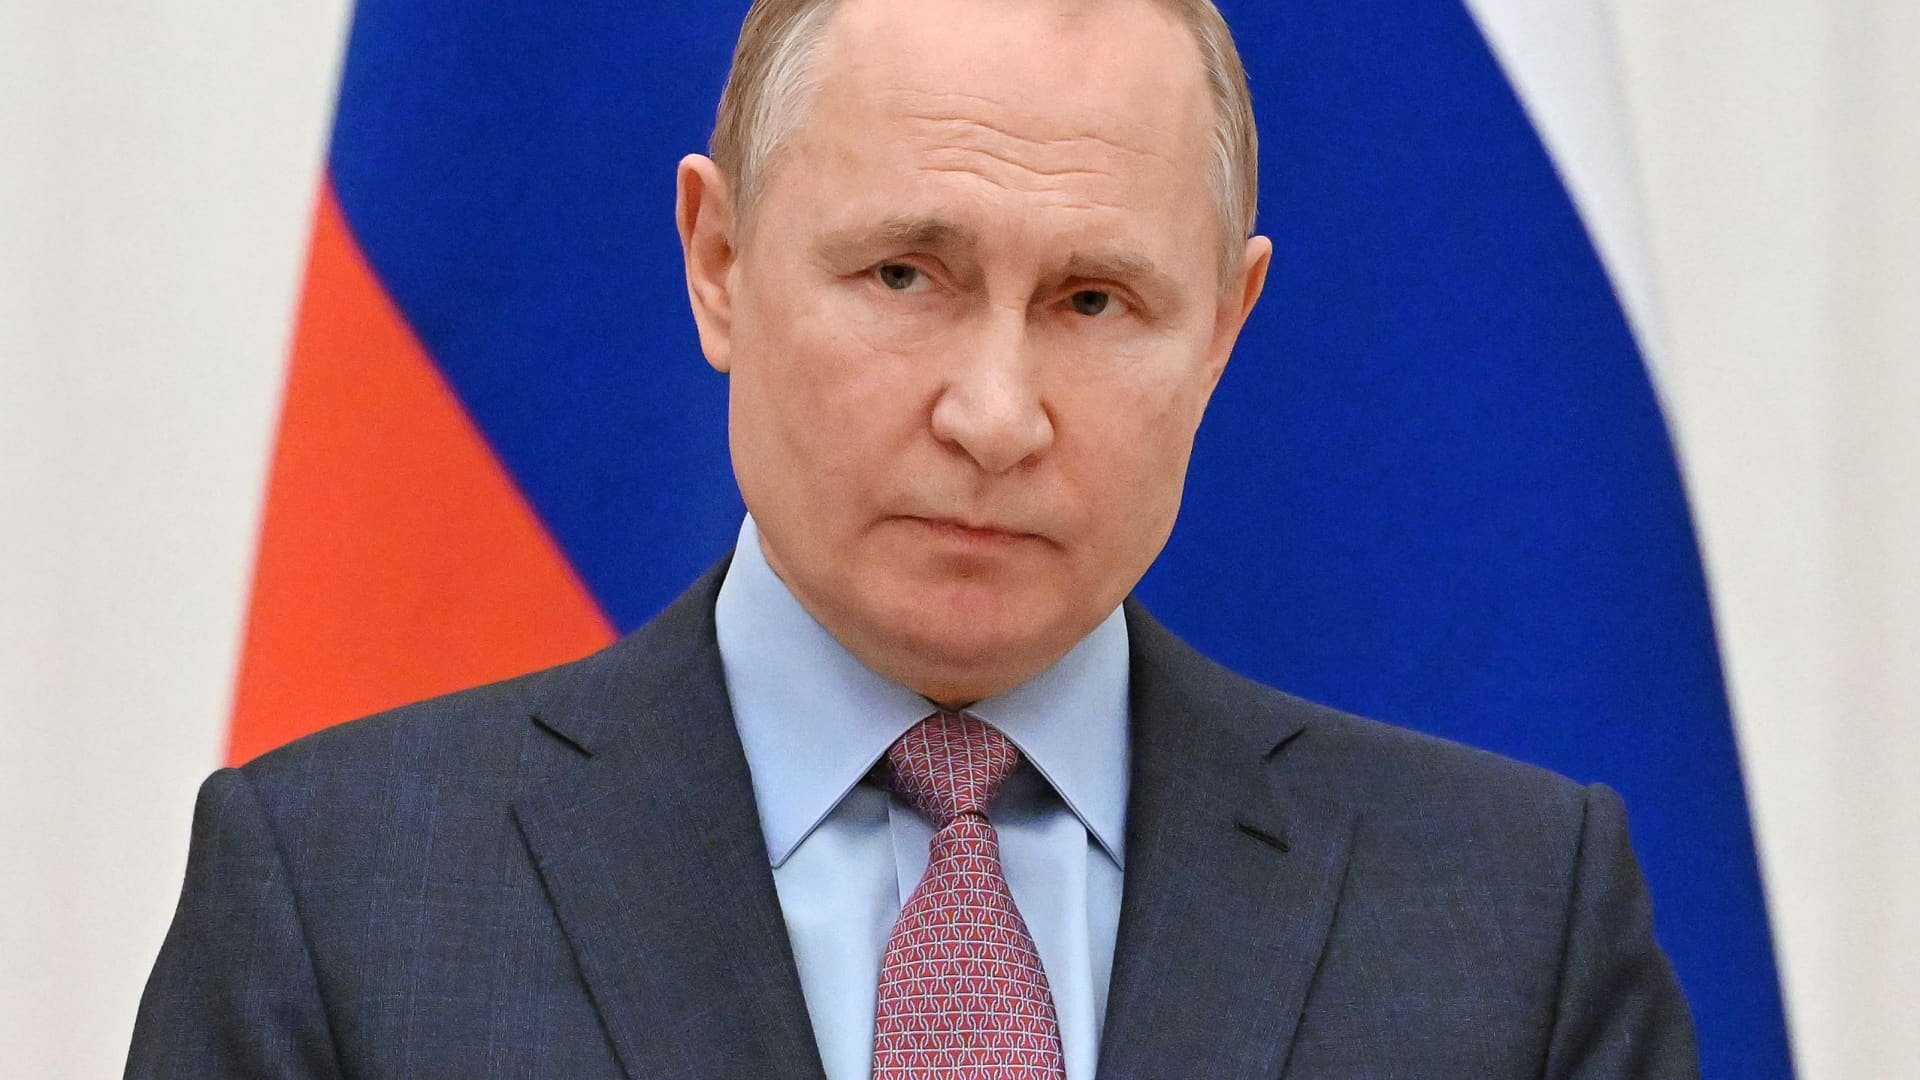 'Putin is redrawing an iron curtain' across Europe, veteran Russian analyst says